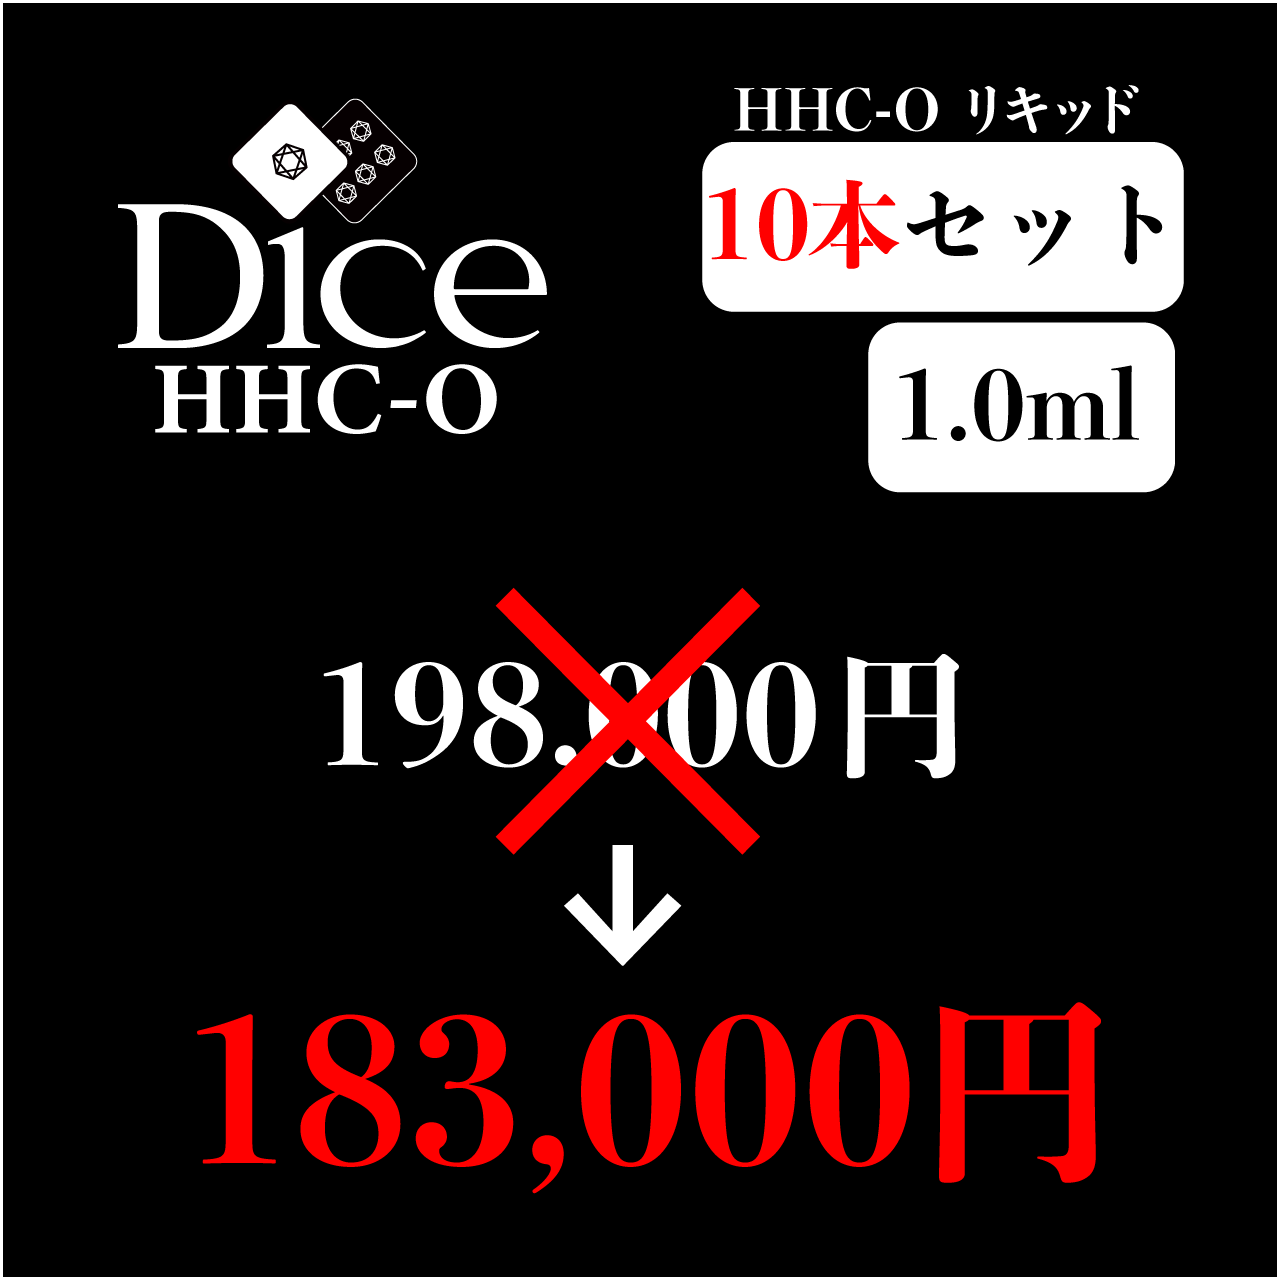 HHC-O【1.0ml-10本セット】